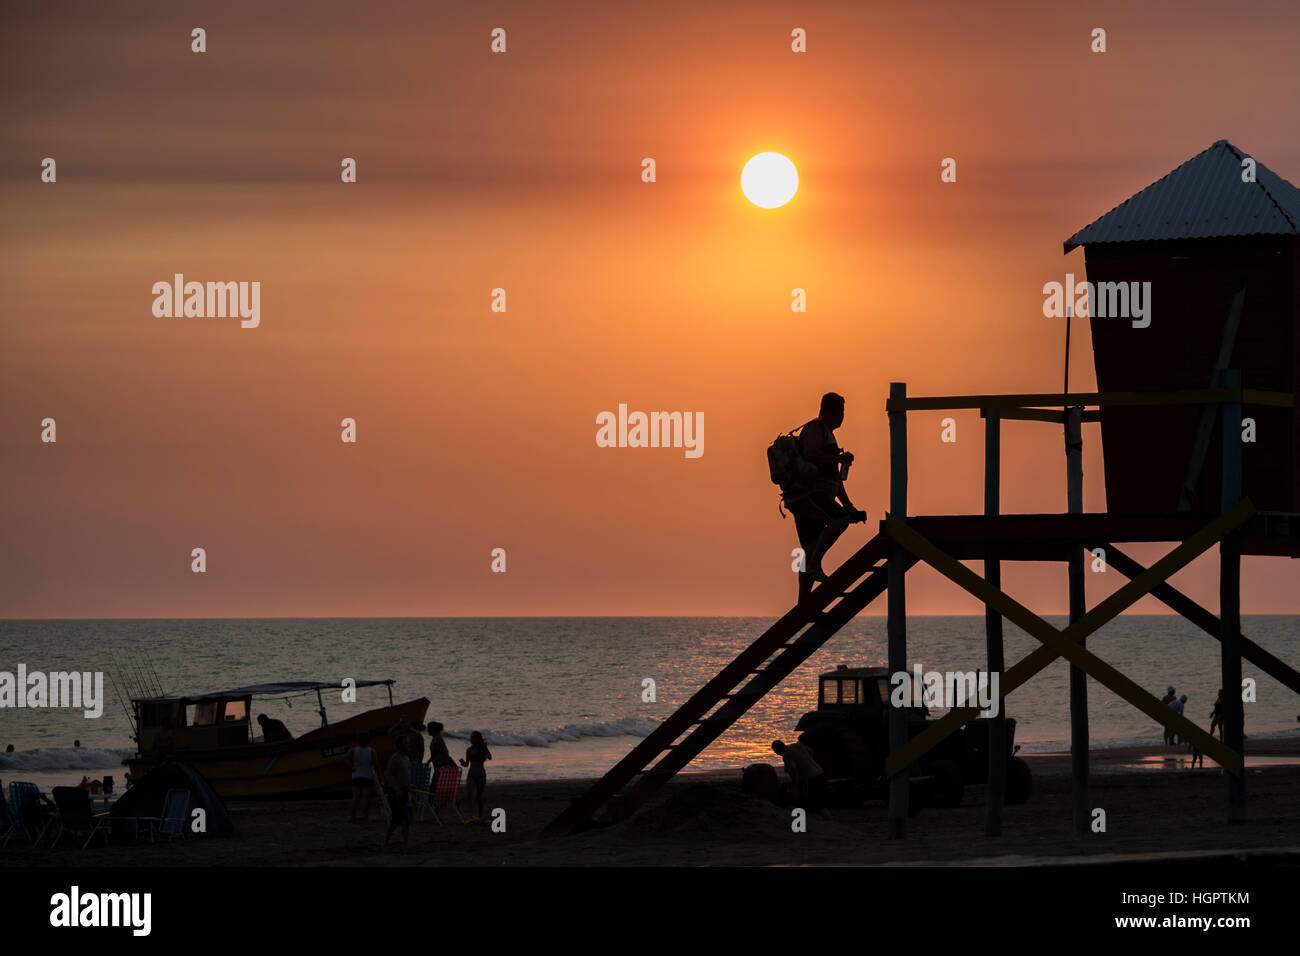 man climbing lifeguard tower at the beach at sunset or sunrise Stock Photo